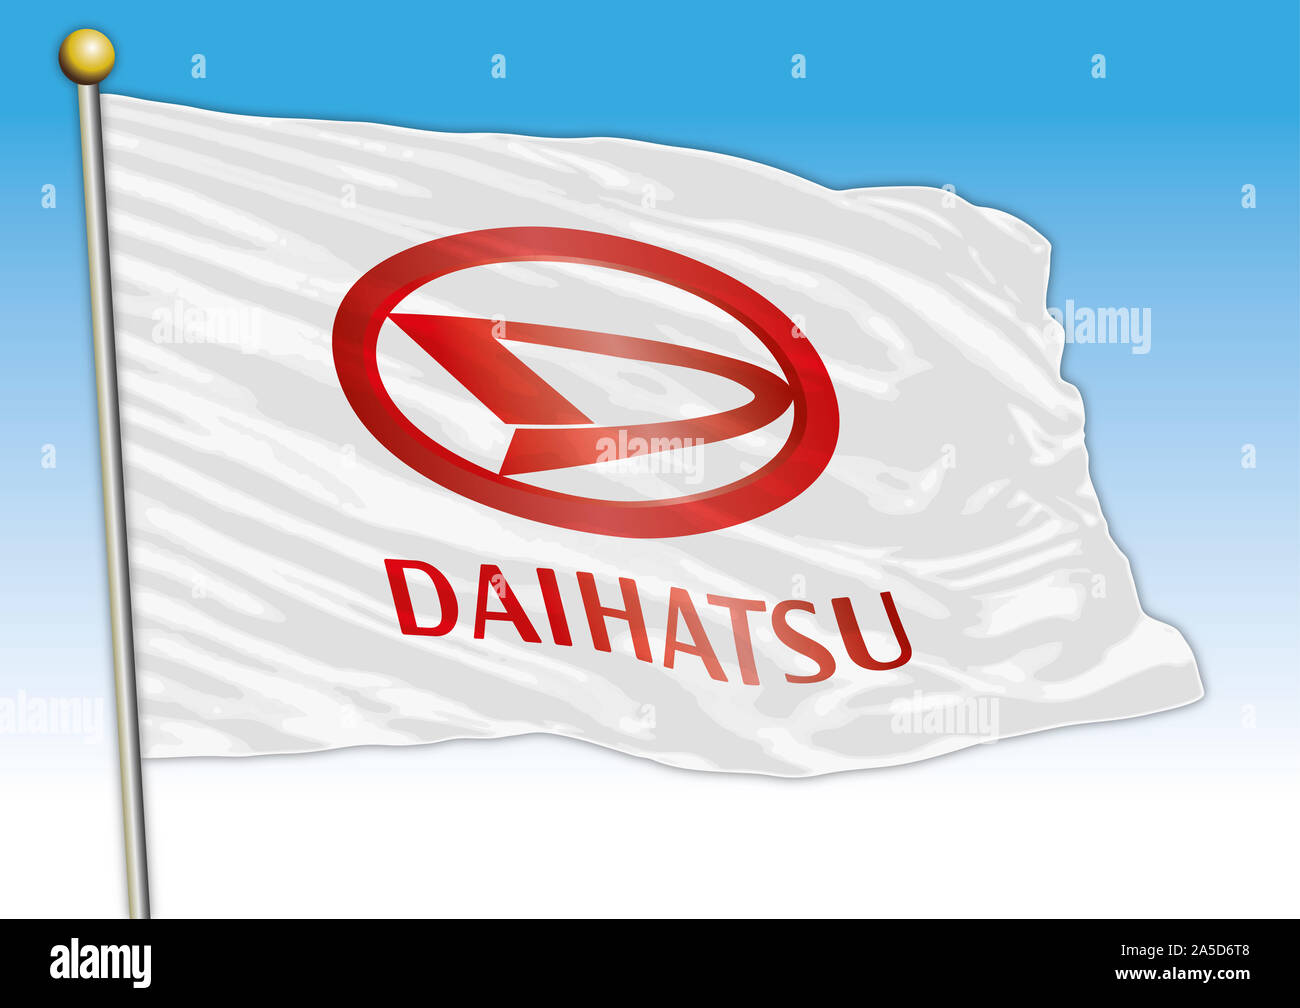 Daihatsu car industrial group, flag with logo, illustration Stock Photo